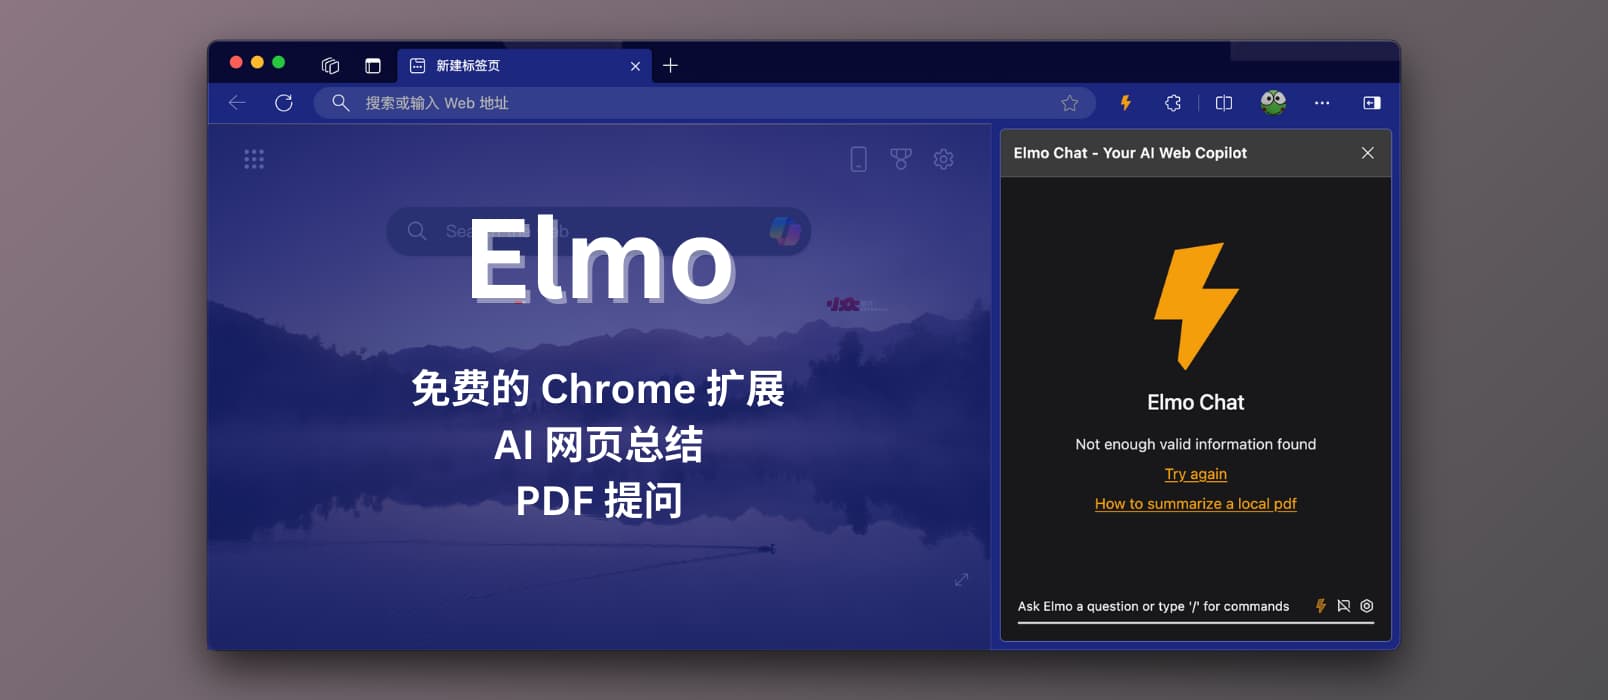 Elmo Chat - 快速总结网站内容、在线视频，与 PDF 聊天、翻译等，免费 Chrome 扩展